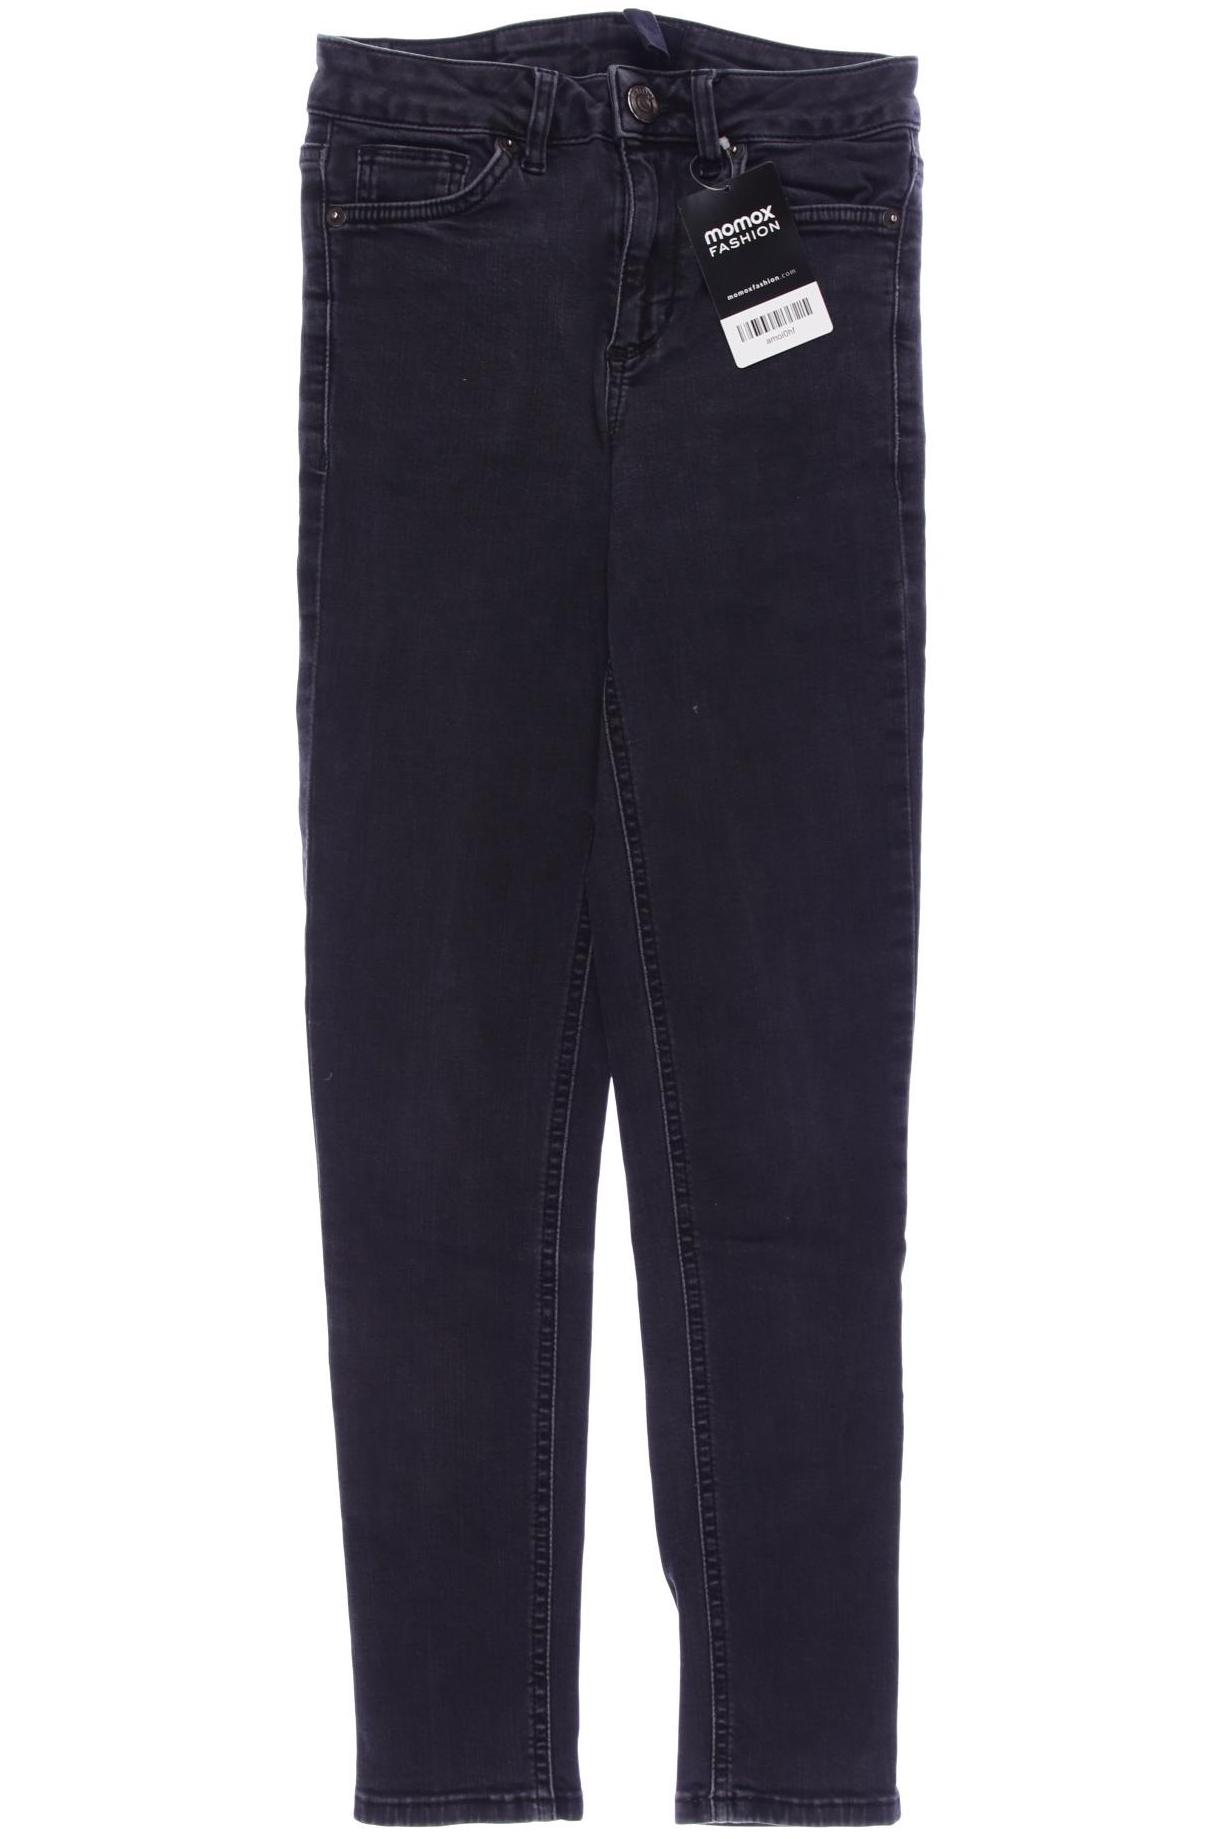 BDG Urban Outfitters Damen Jeans, schwarz, Gr. 34 von BDG Urban Outfitters